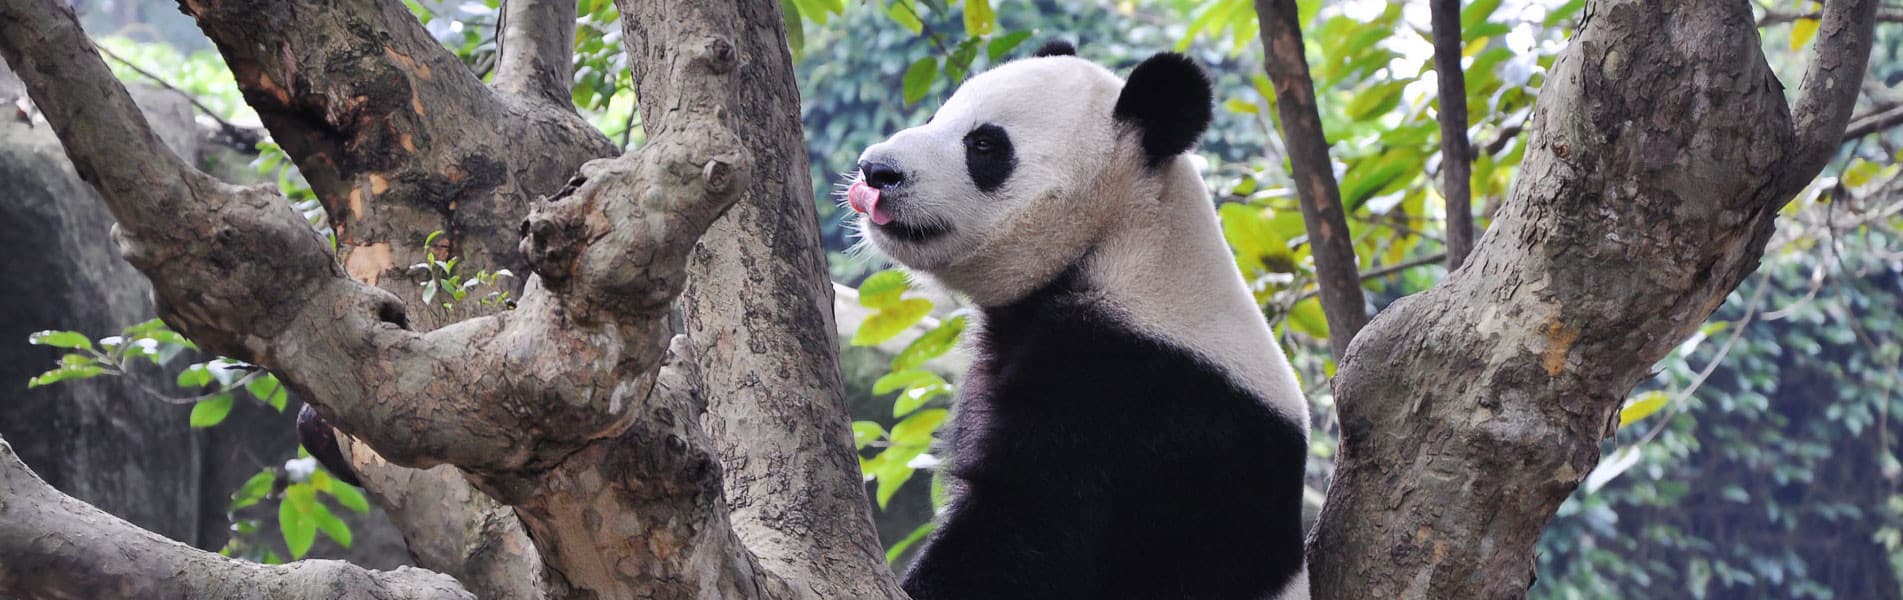 Giant pandas, Chengdu